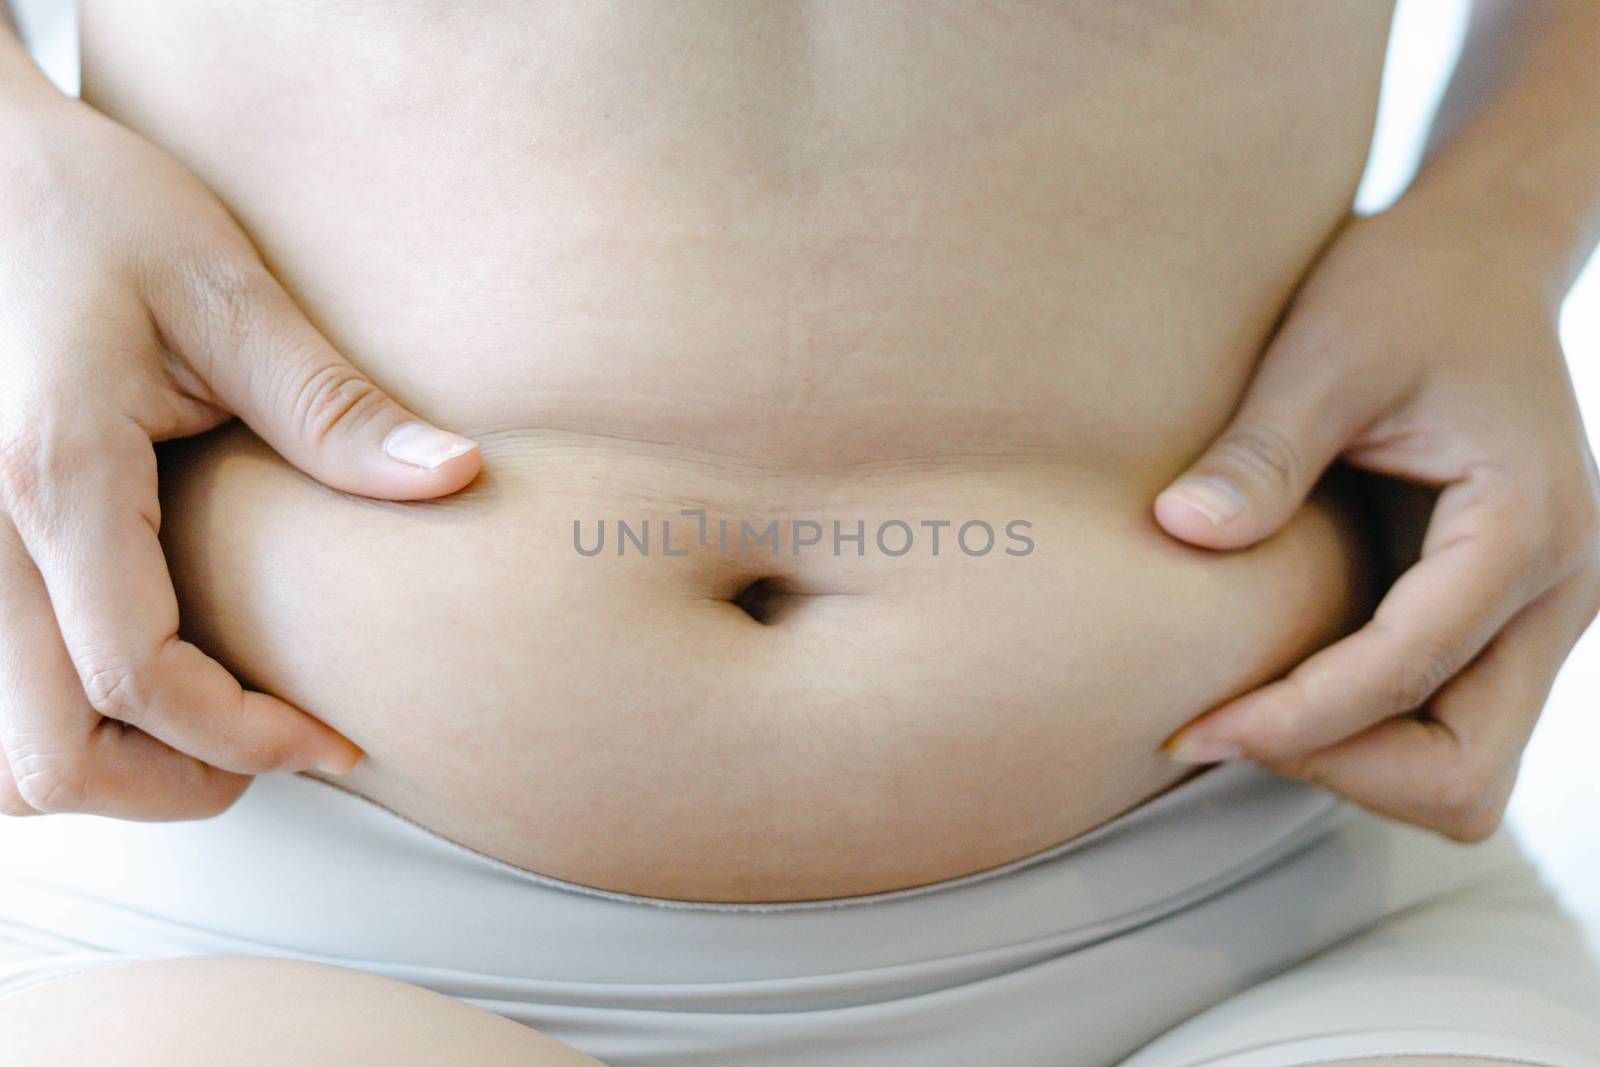 Closeup hand holding abdominal surface woman fat, healthy care a by pt.pongsak@gmail.com